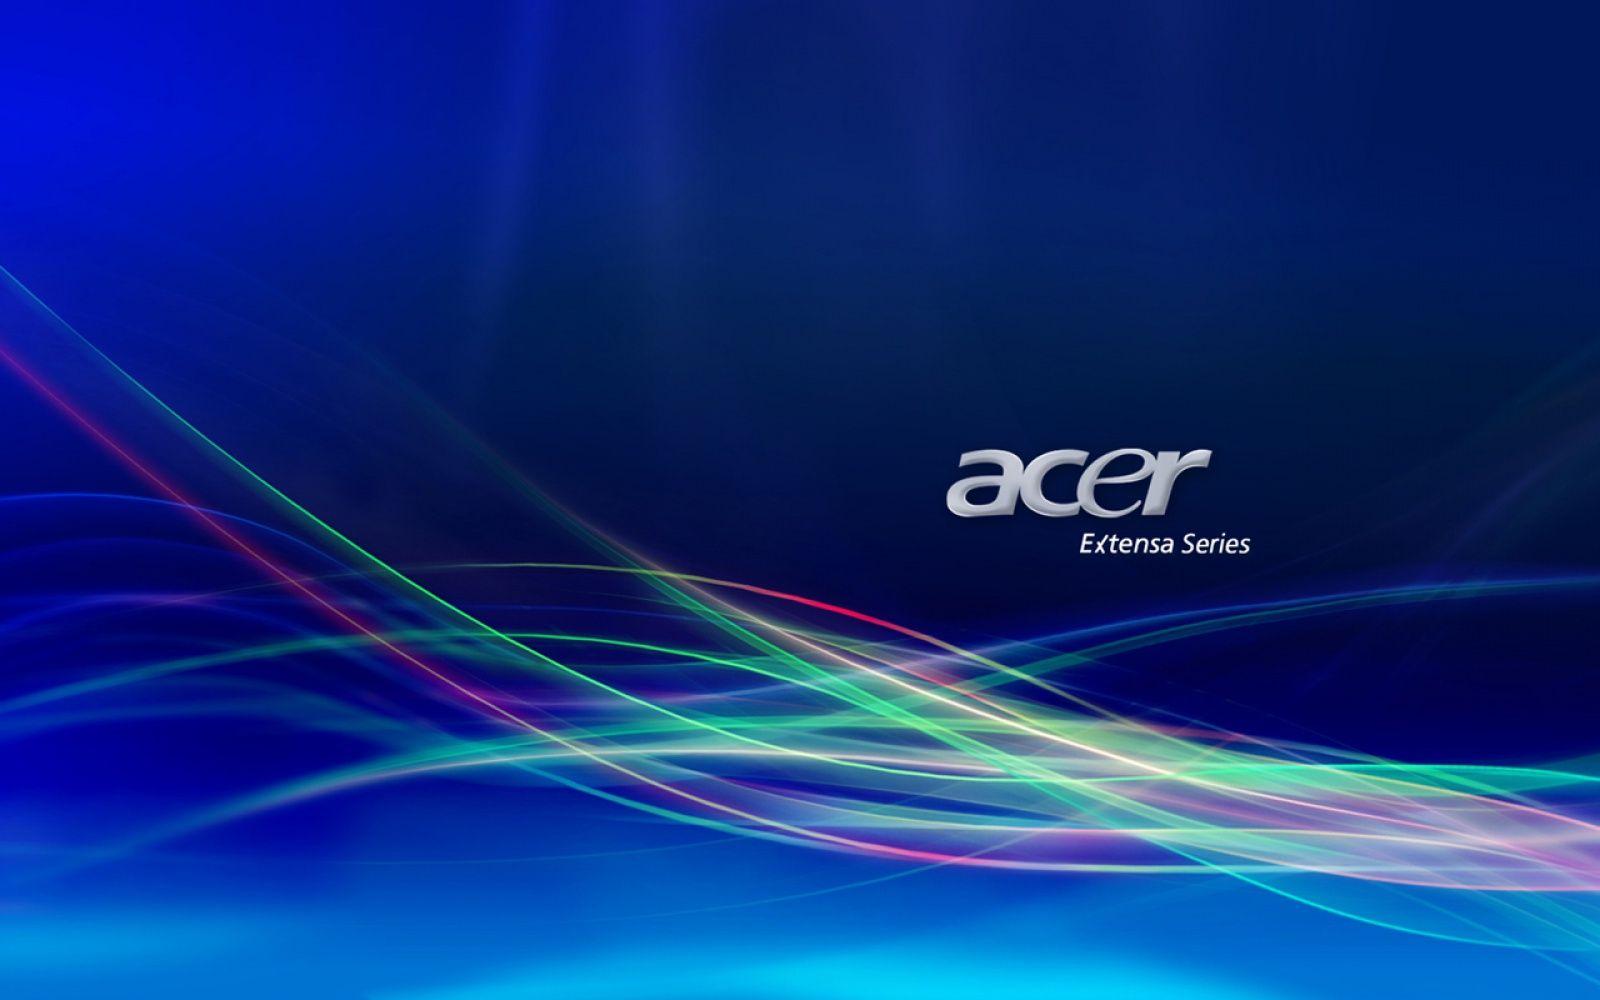 acer #720P #wallpaper #hdwallpaper #desktop | Acer, Acer desktop, Desktop  wallpapers backgrounds